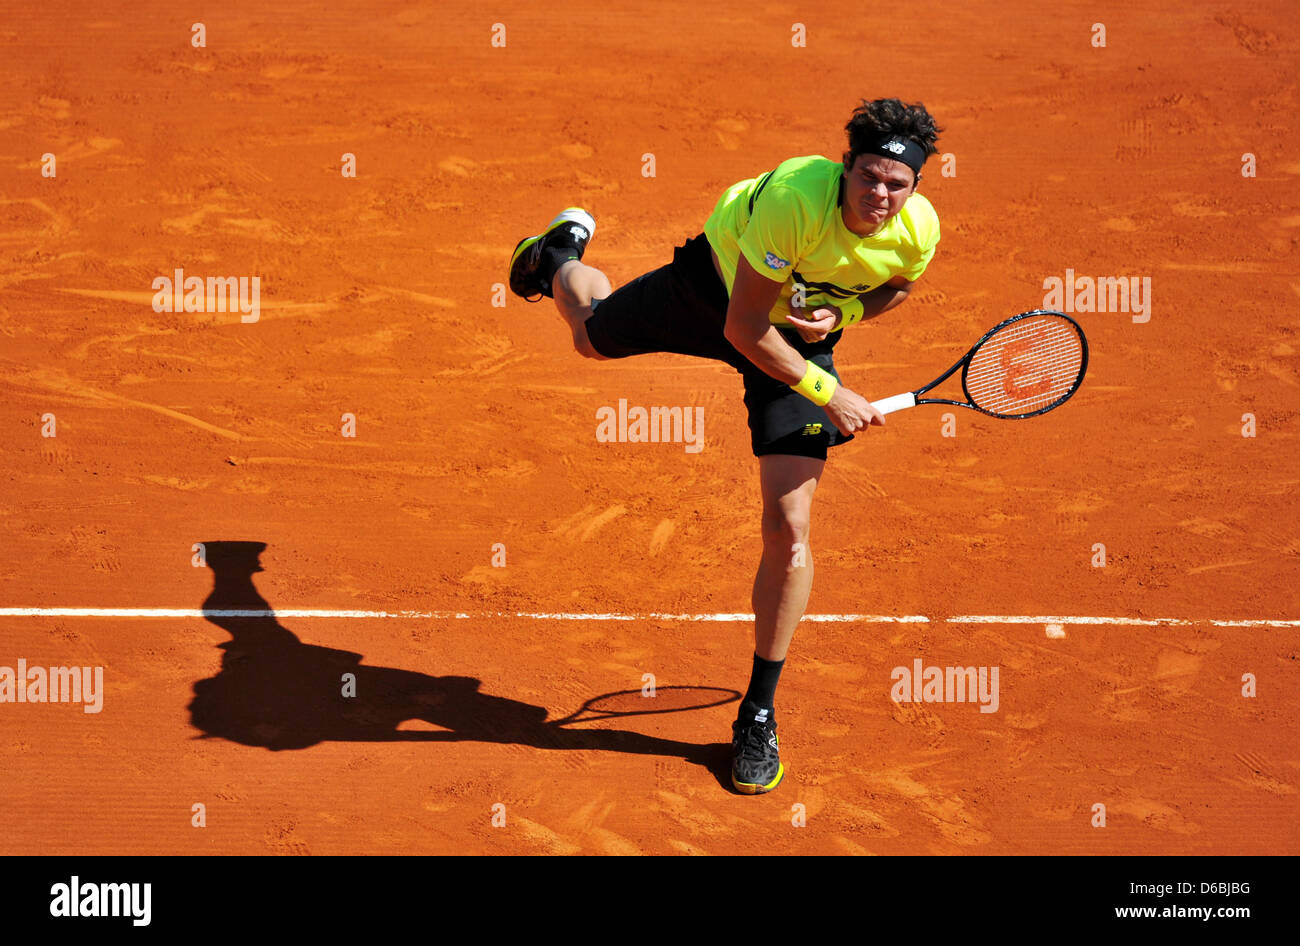 Monte Carlo, Monaco. 15. April 2013. Rolex Masters Tennis. . Zunächst dient rund - Milos Raonic.  Bild: Neal Simpson/Paul Marriott Fotografie/Alamy Live News Stockfoto